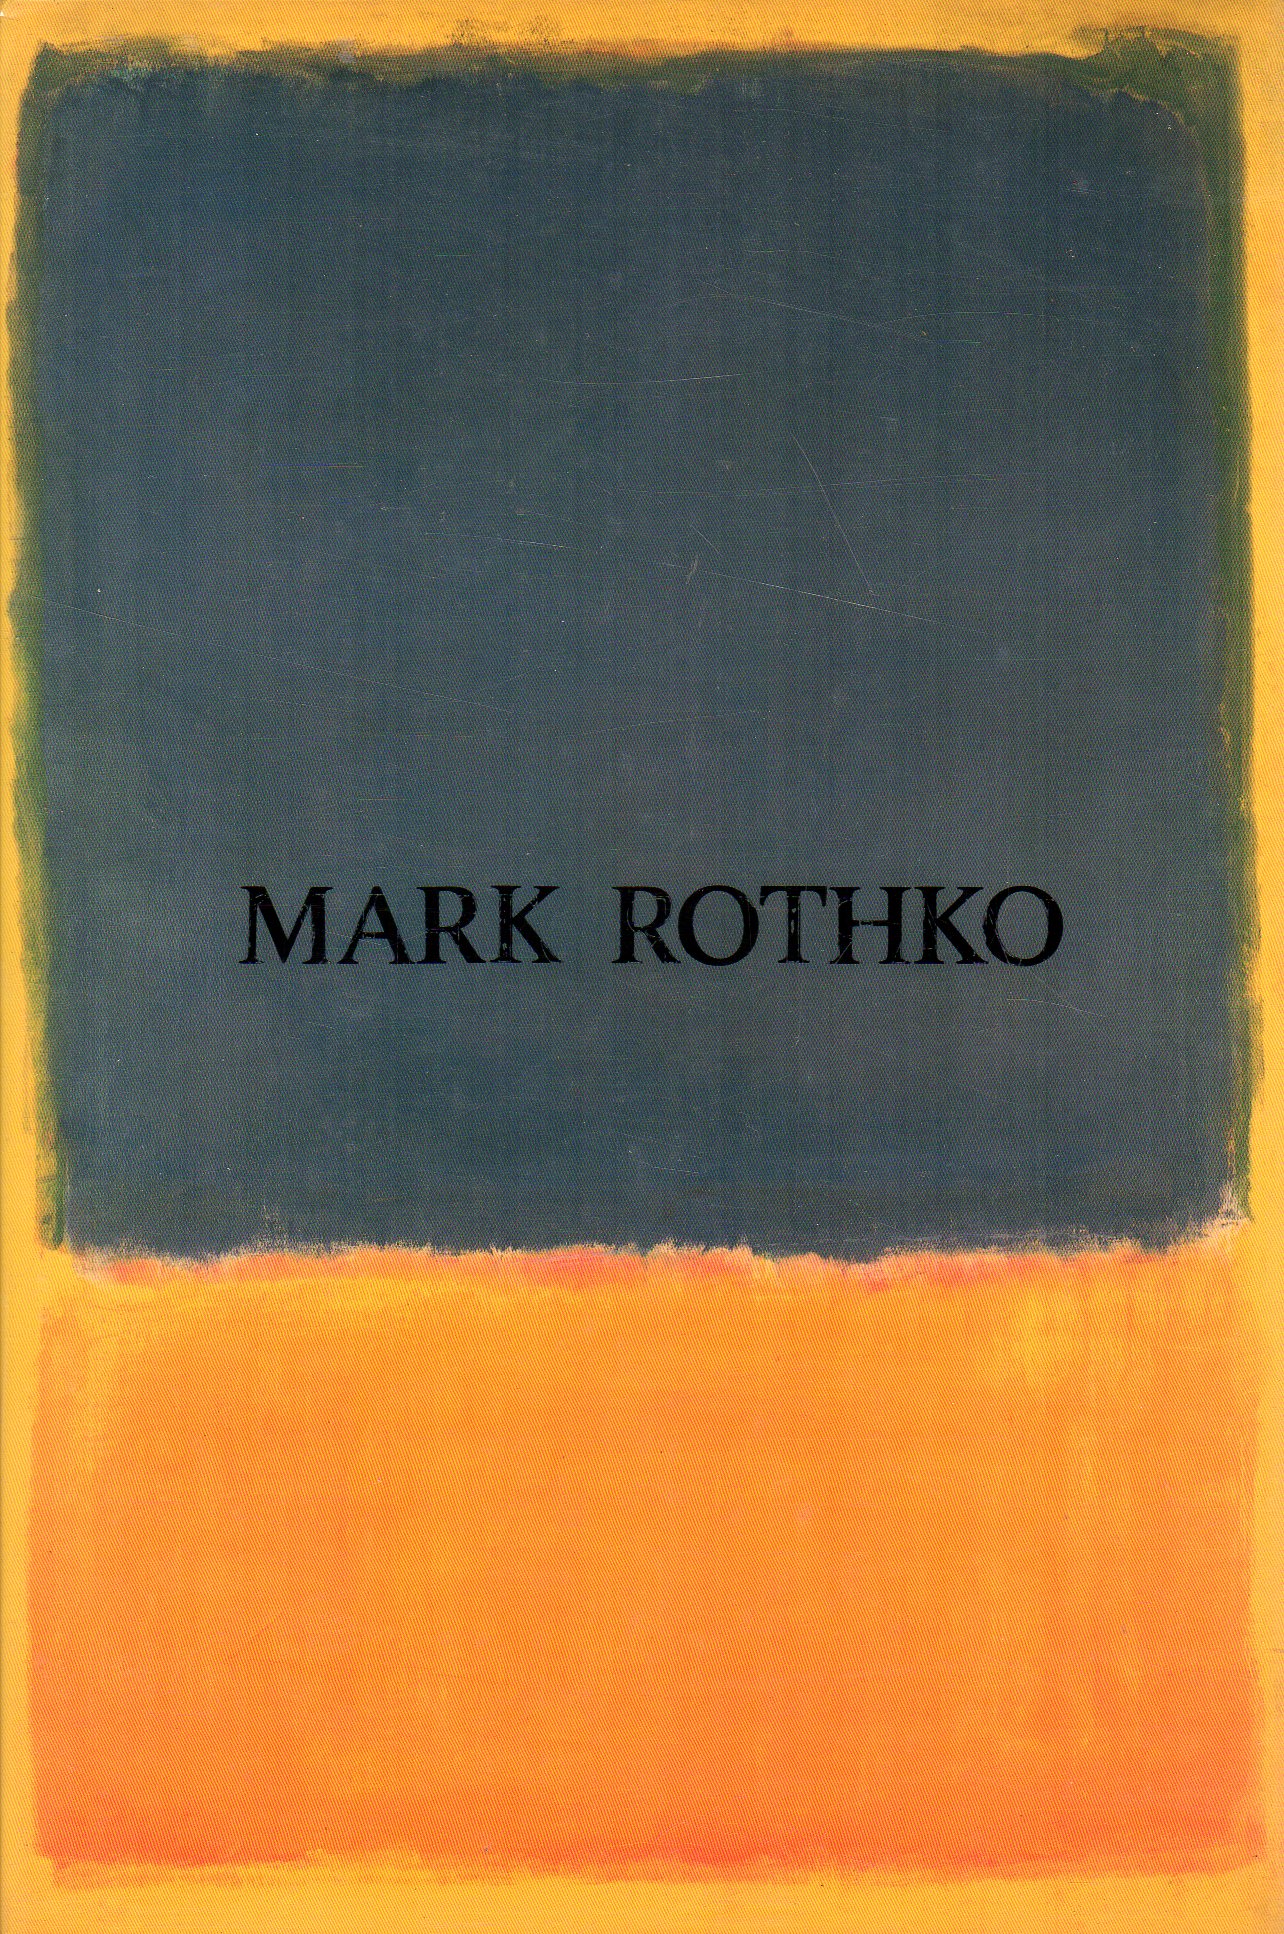 Mark Rothko - Mark Rothko - Retrospective Exhibition in Japan